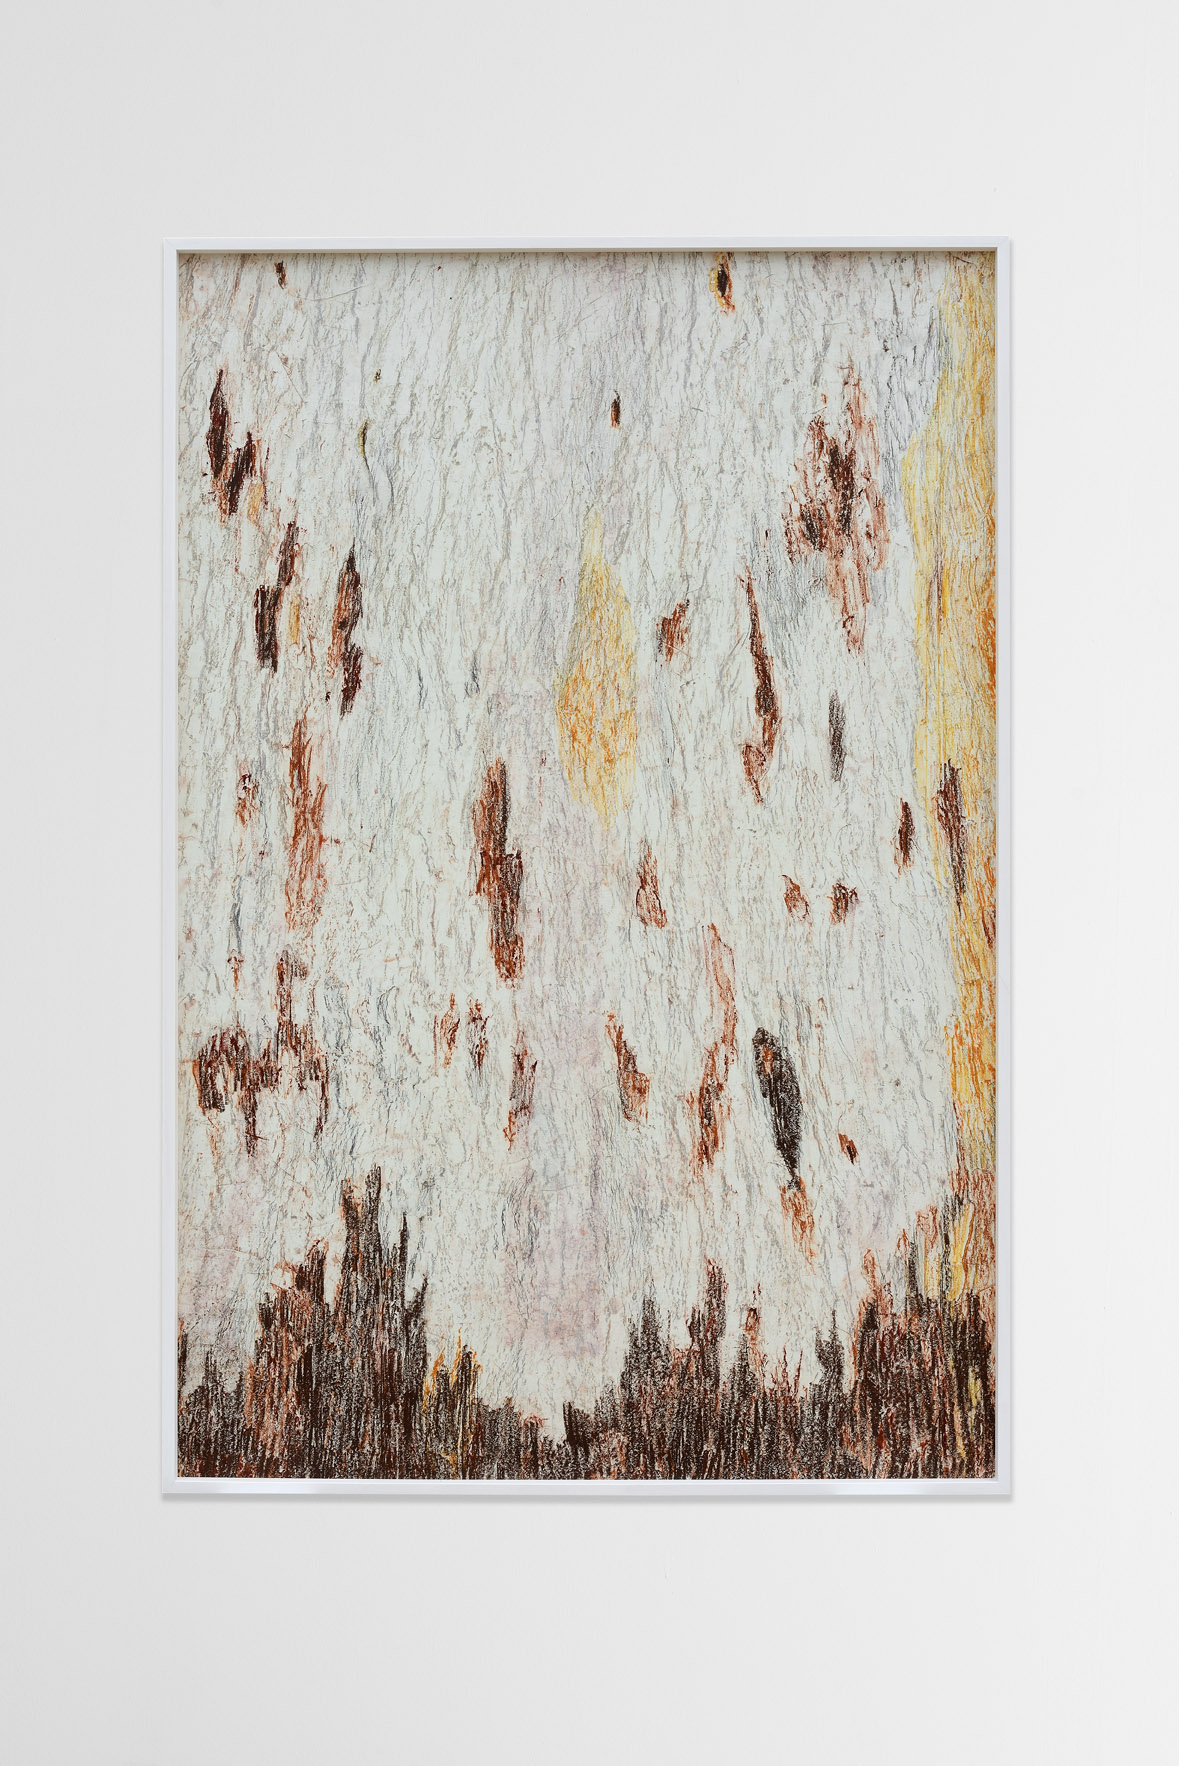 Eucalyptus Camaldolensys - Australian Red Gum Tree #1, 2016, graphites and wax pastels on paper, 150x100 cm, photo credits @ Michele Alberto Sereni